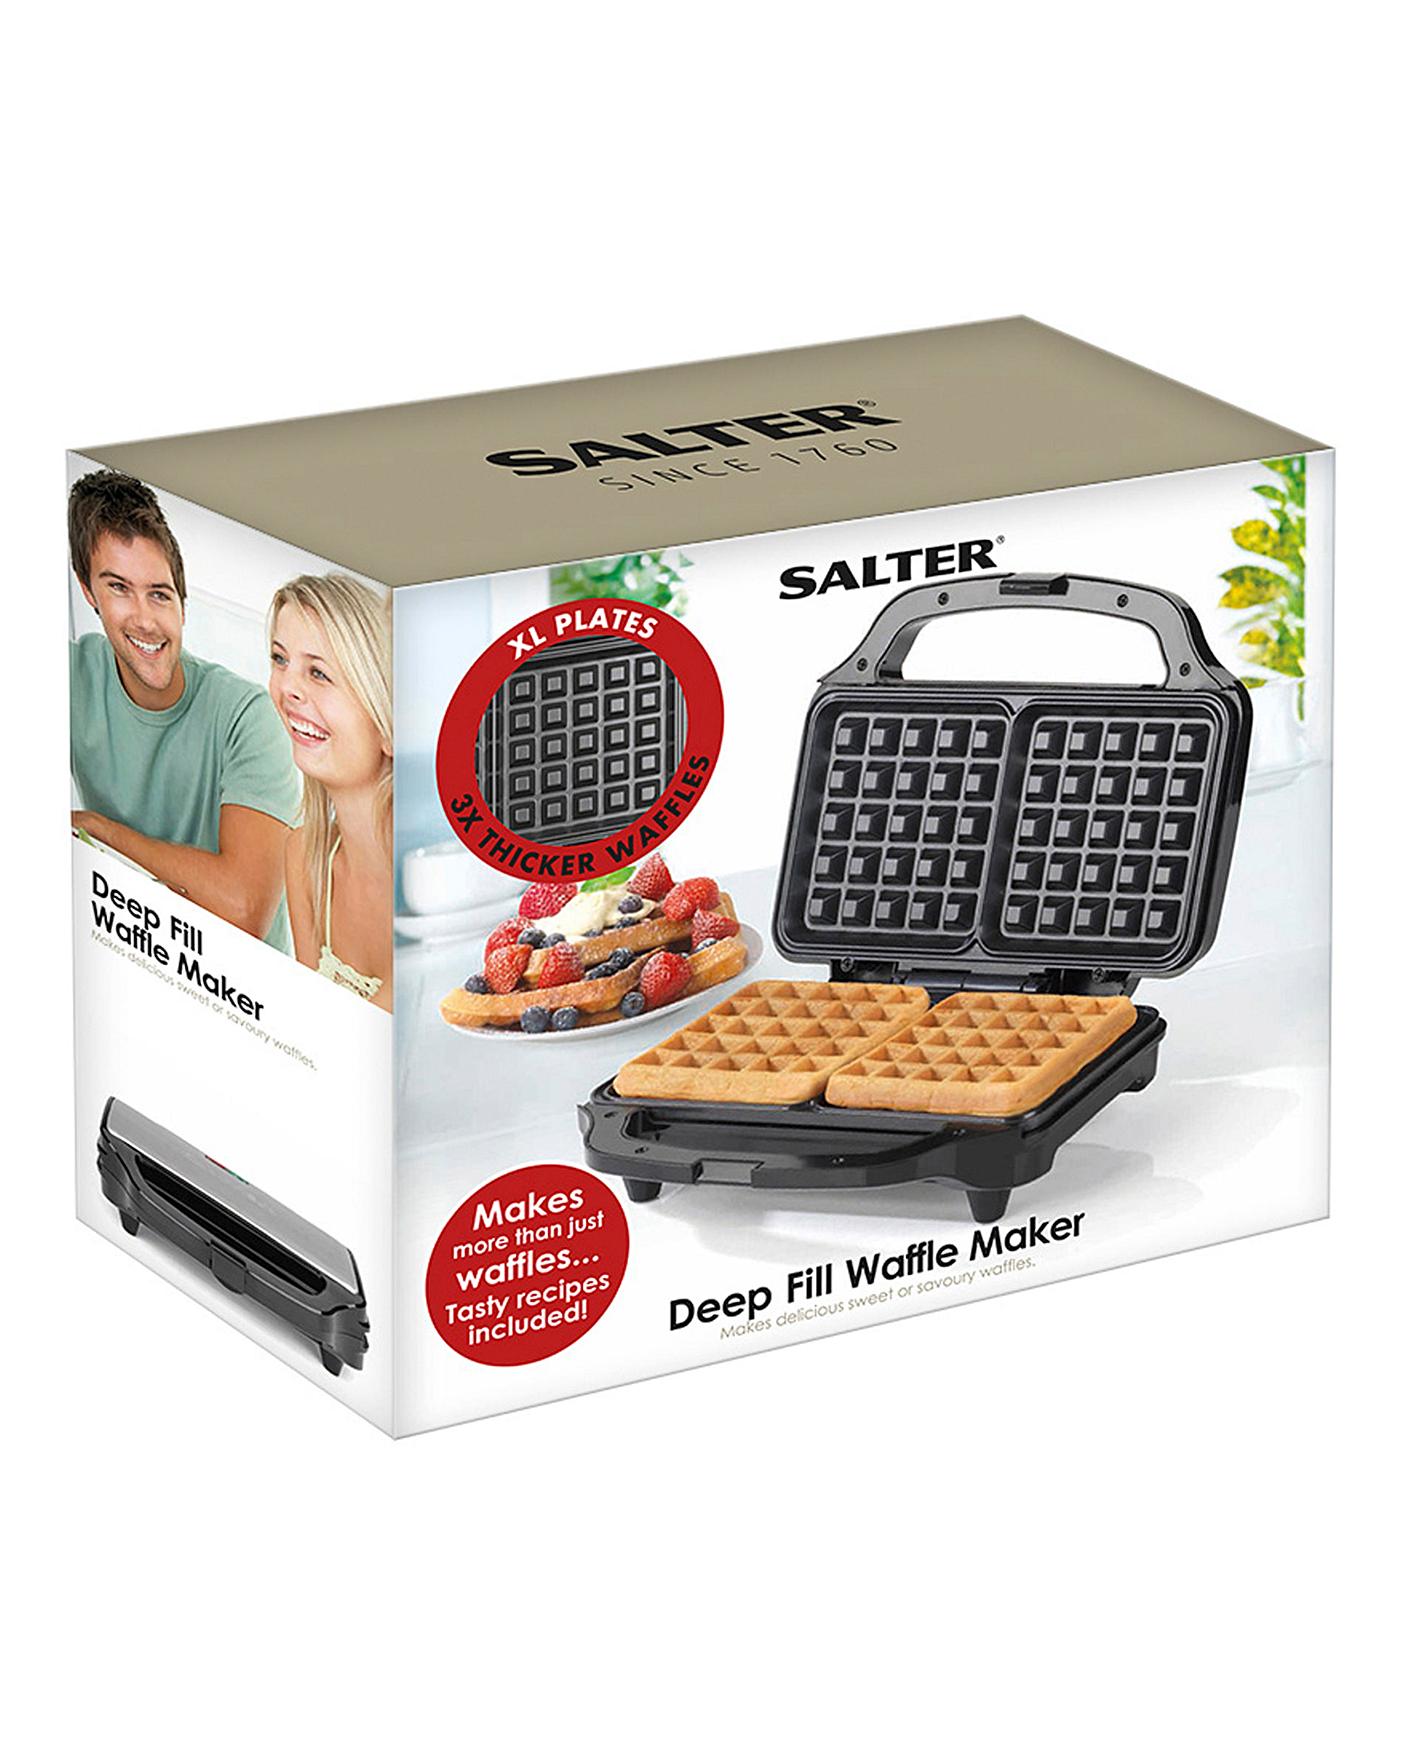 Sokany вафельница. Waffle maker. Вафельница Mini maker Waffle. Waffle maker g120. Waffle maker глушитель.